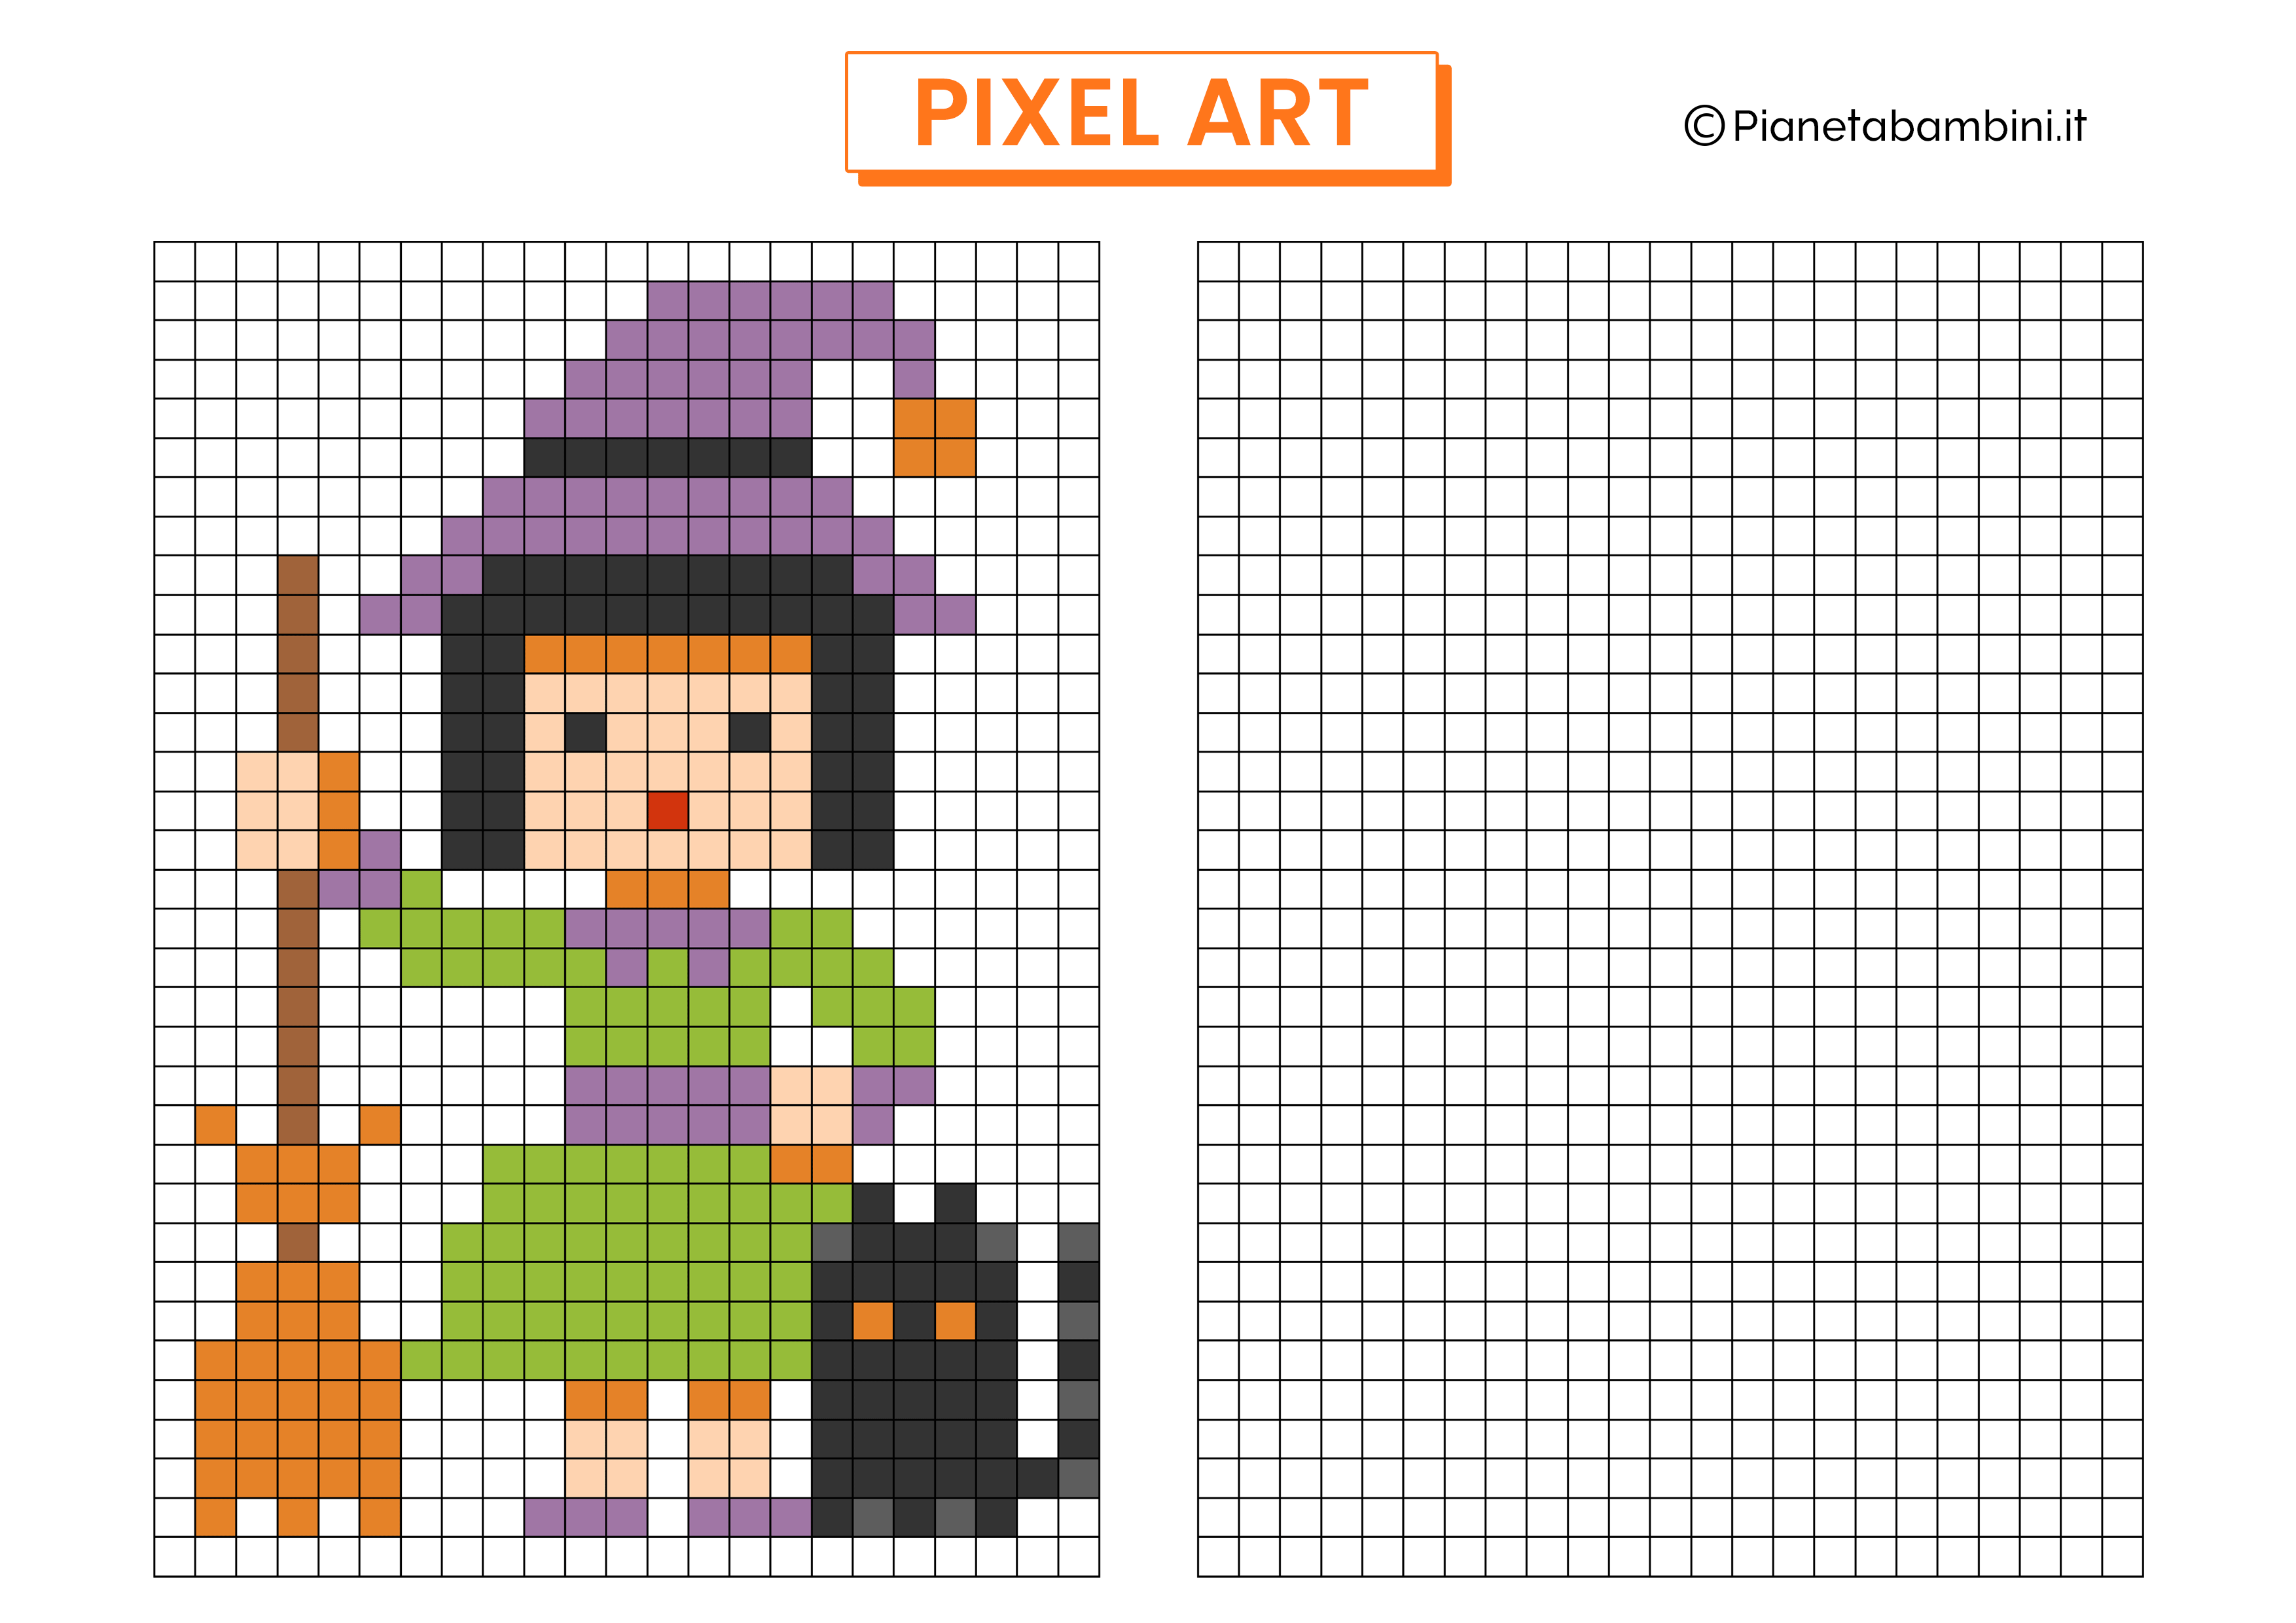 Pixel Art Befana Da Copiare e stampare